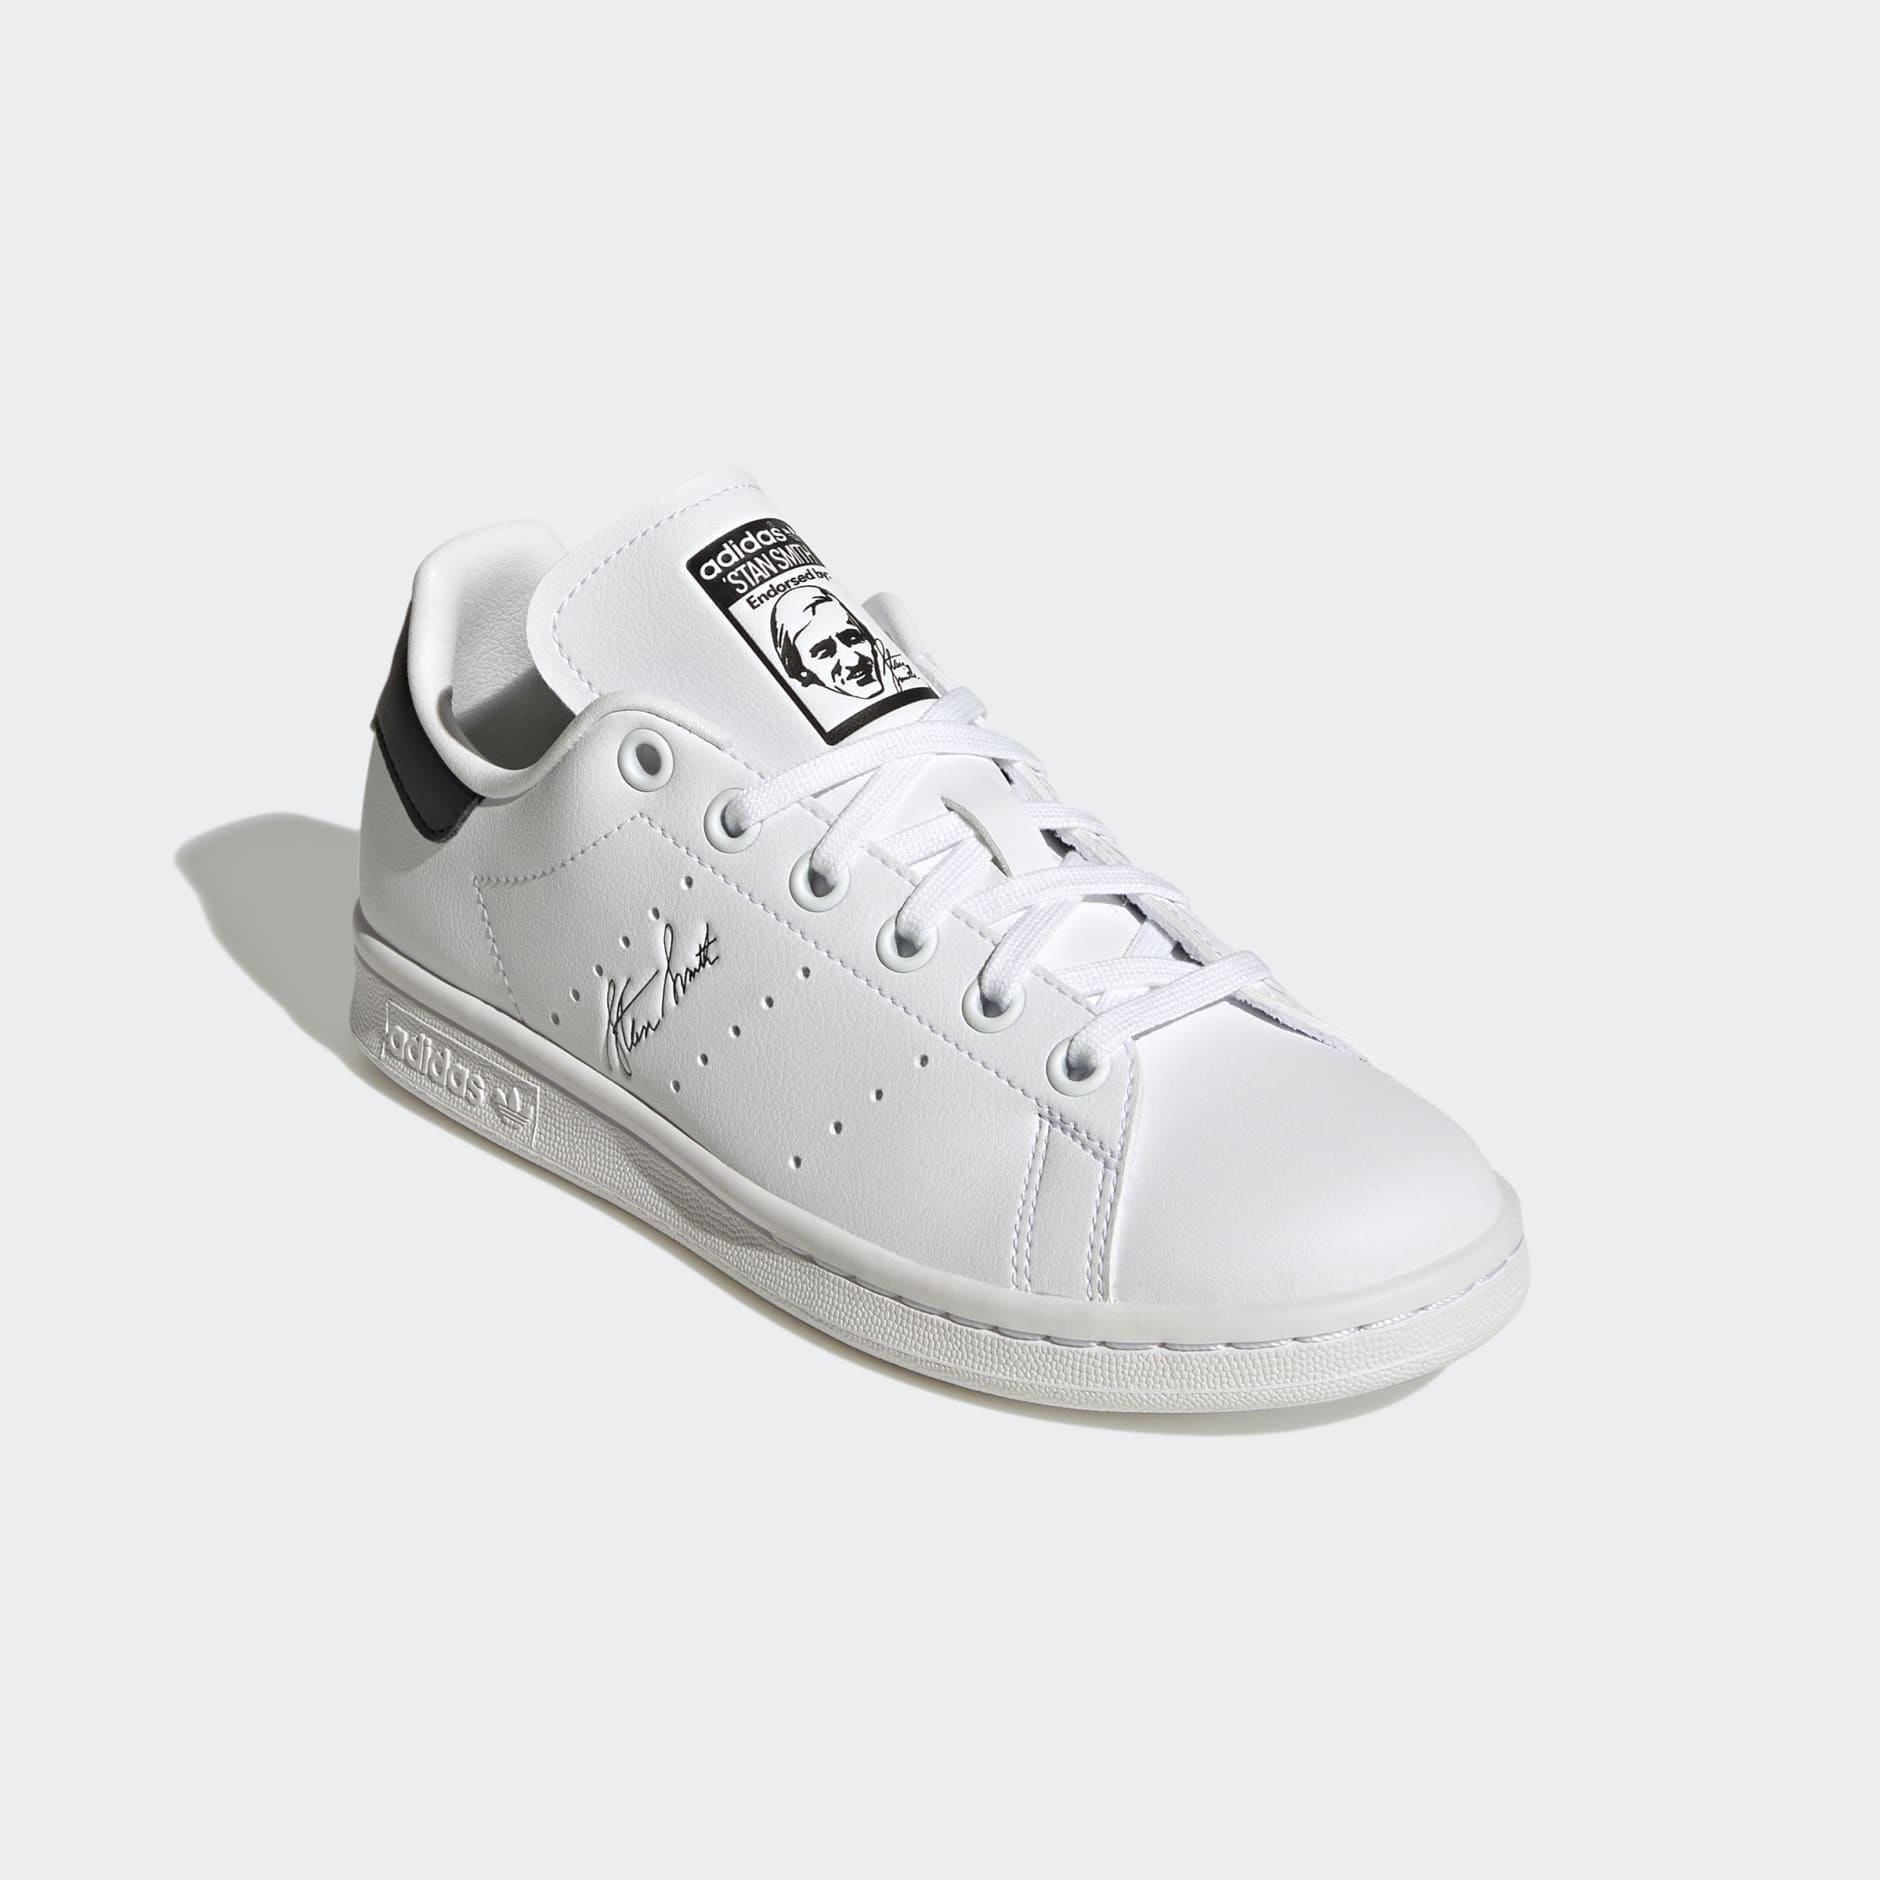 doe niet Cyclopen Effectiviteit adidas Kermit Stan Smith Shoes - White | adidas TZ